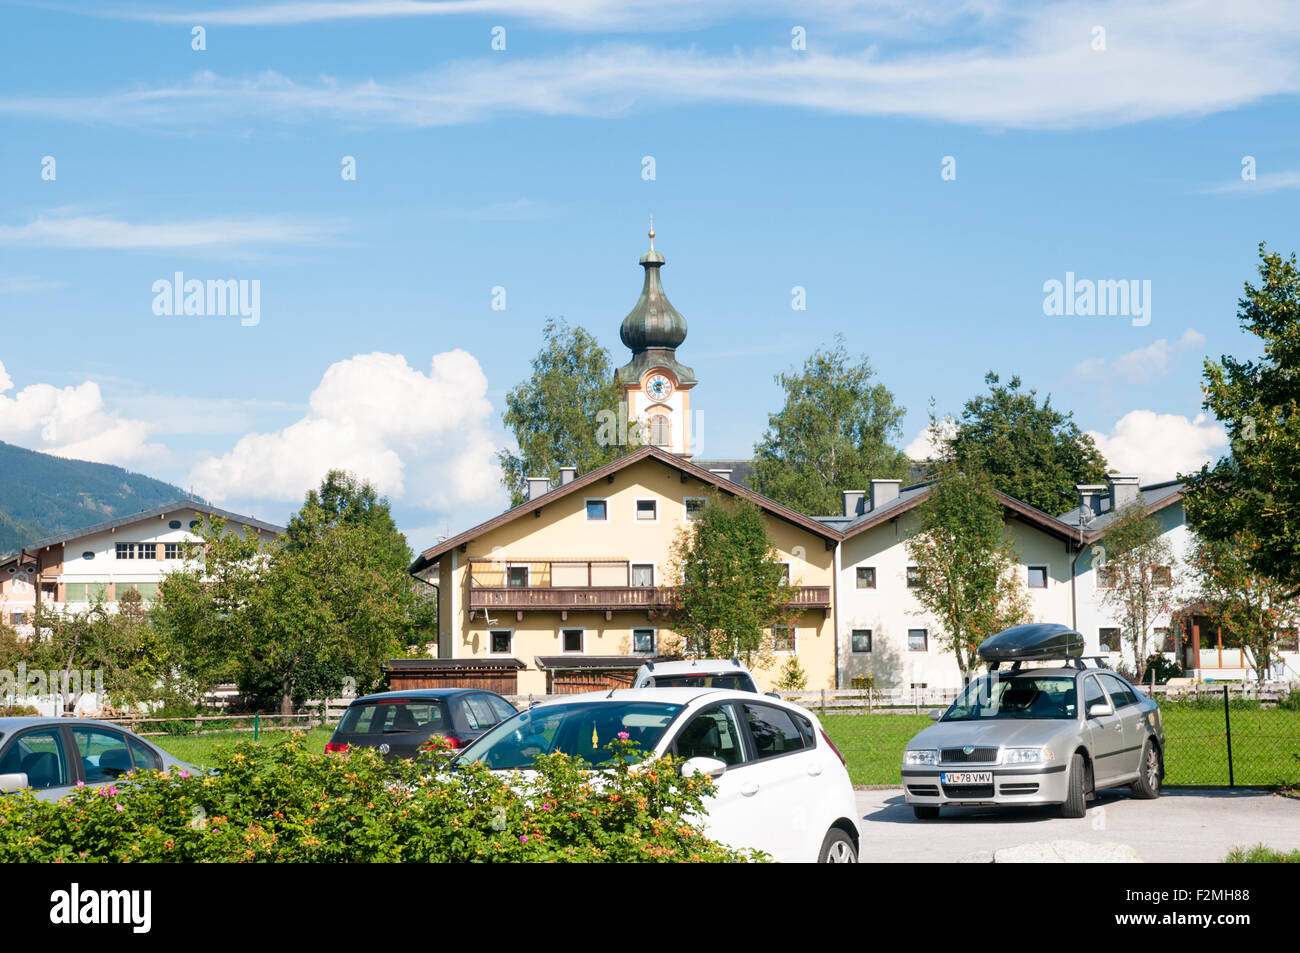 Austria, Tyrol, Mittersill town centre Stock Photo